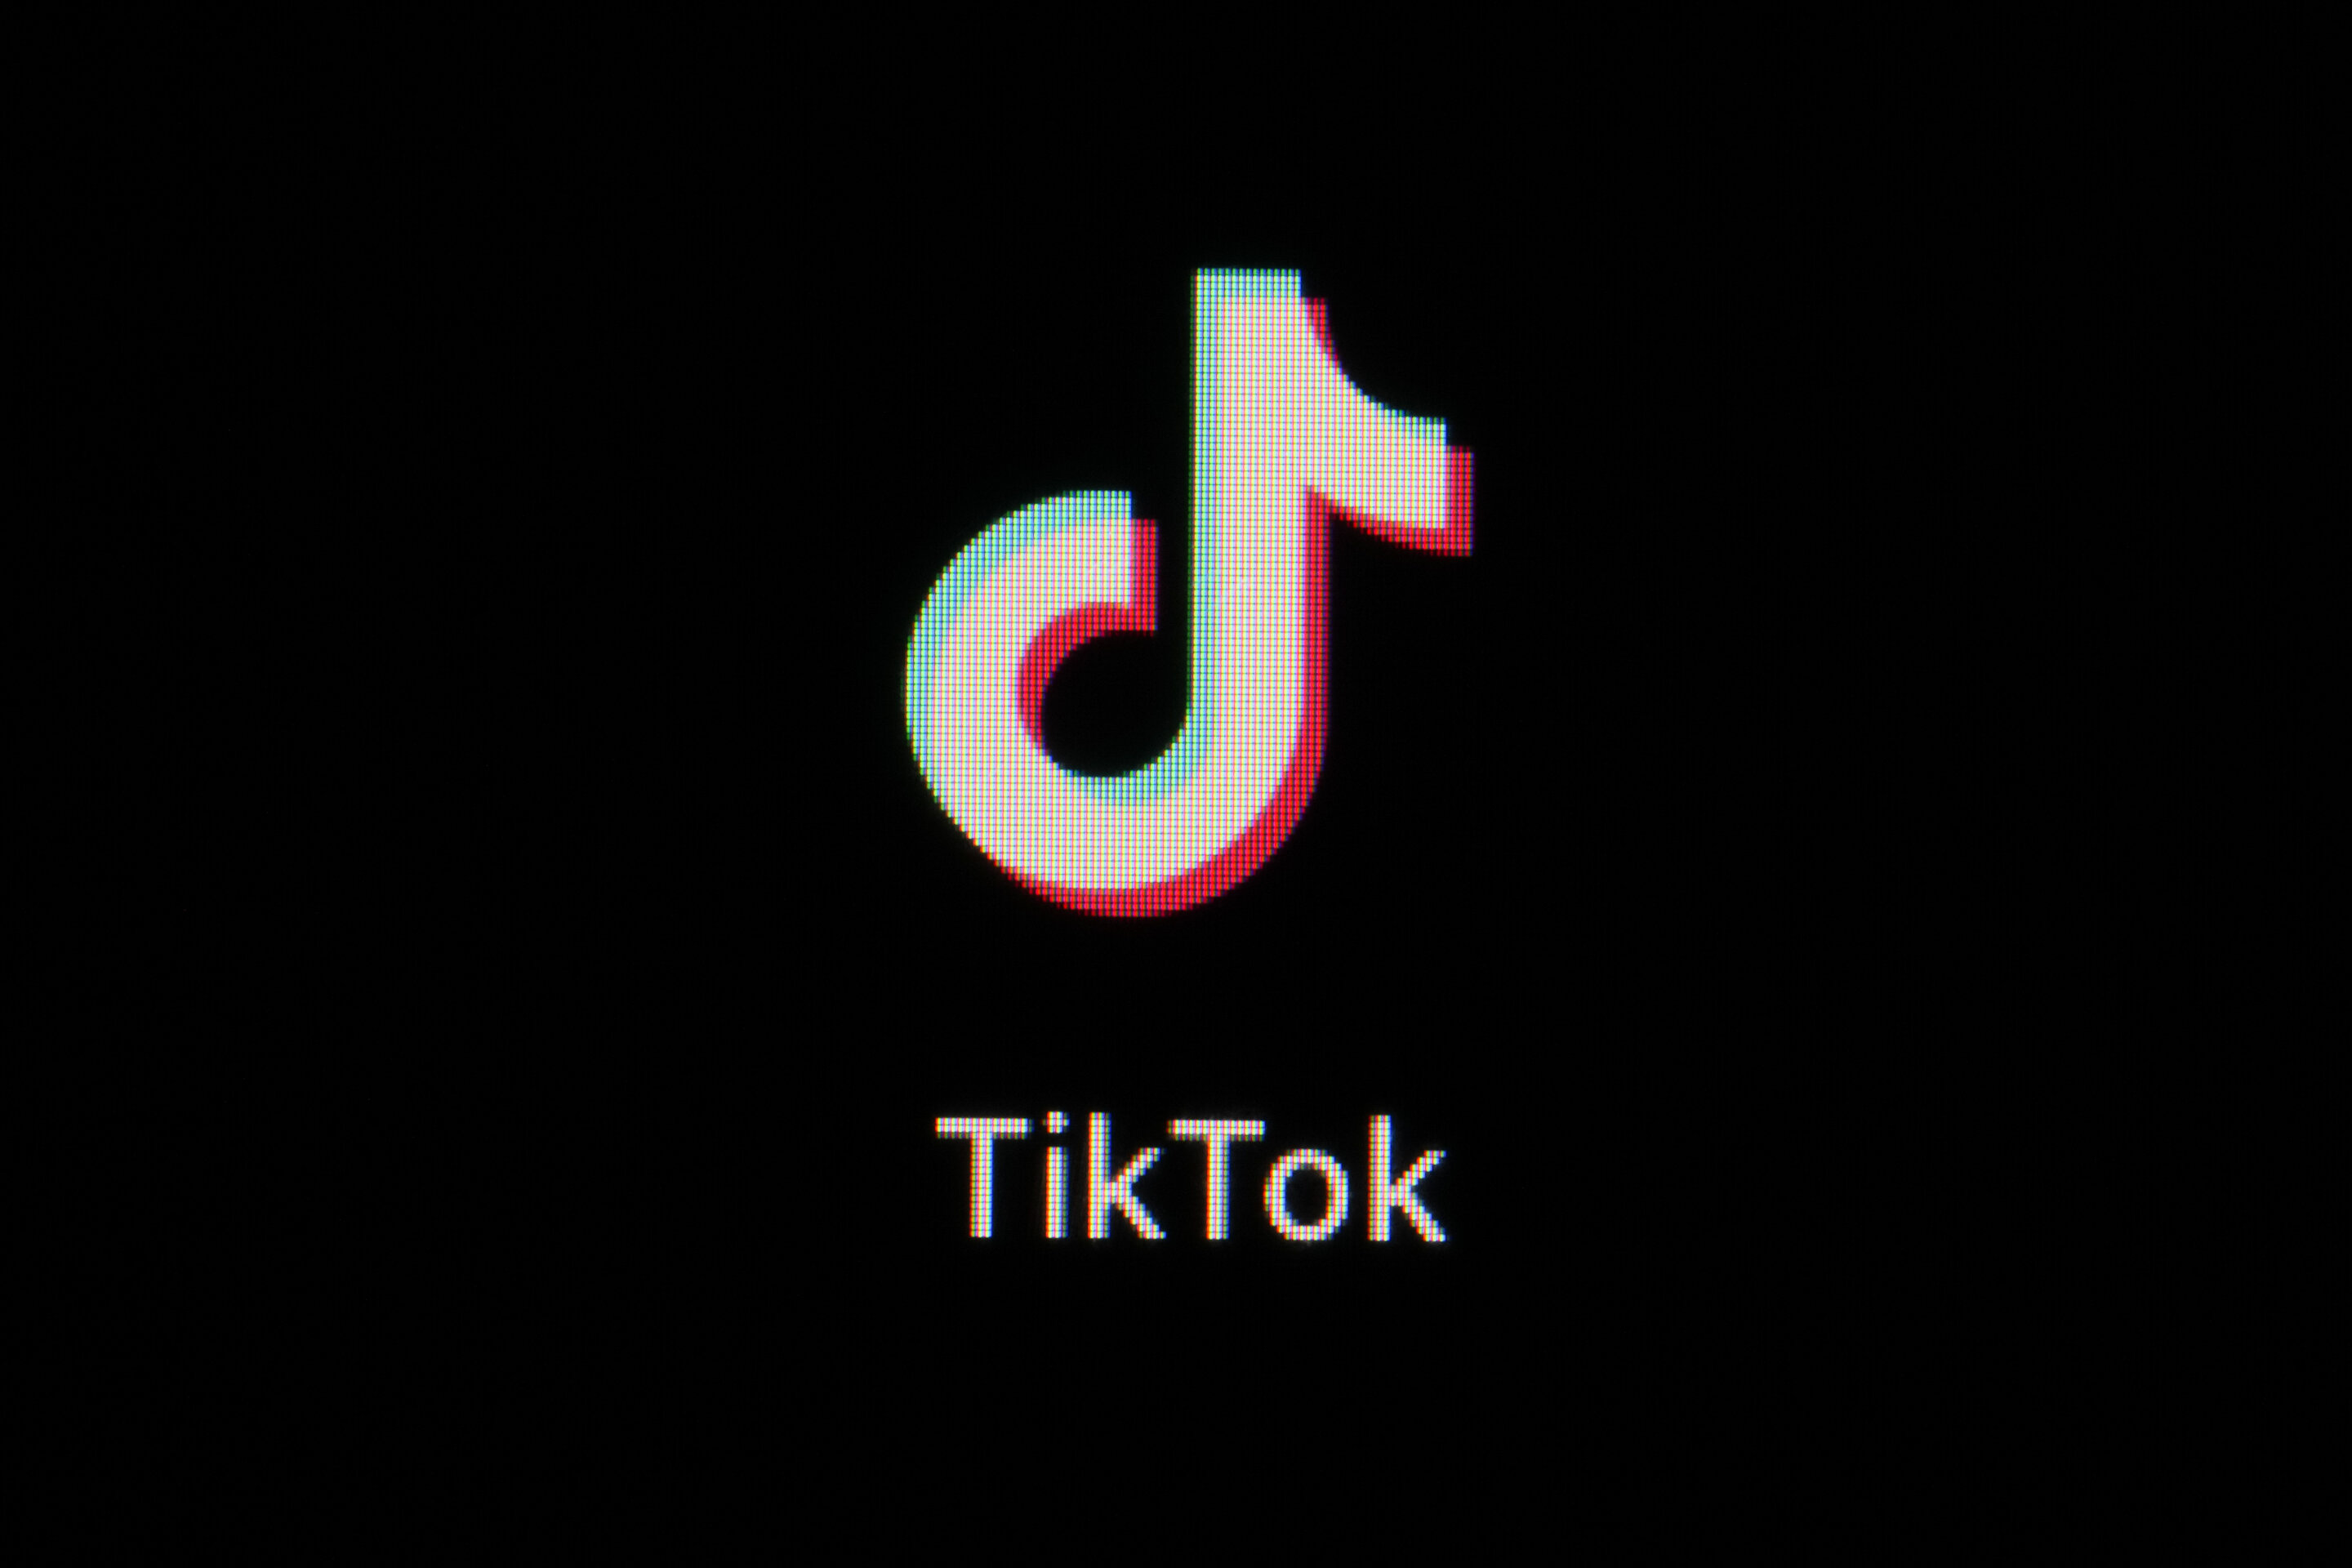 tik tok-but it has the Roblox logo instead